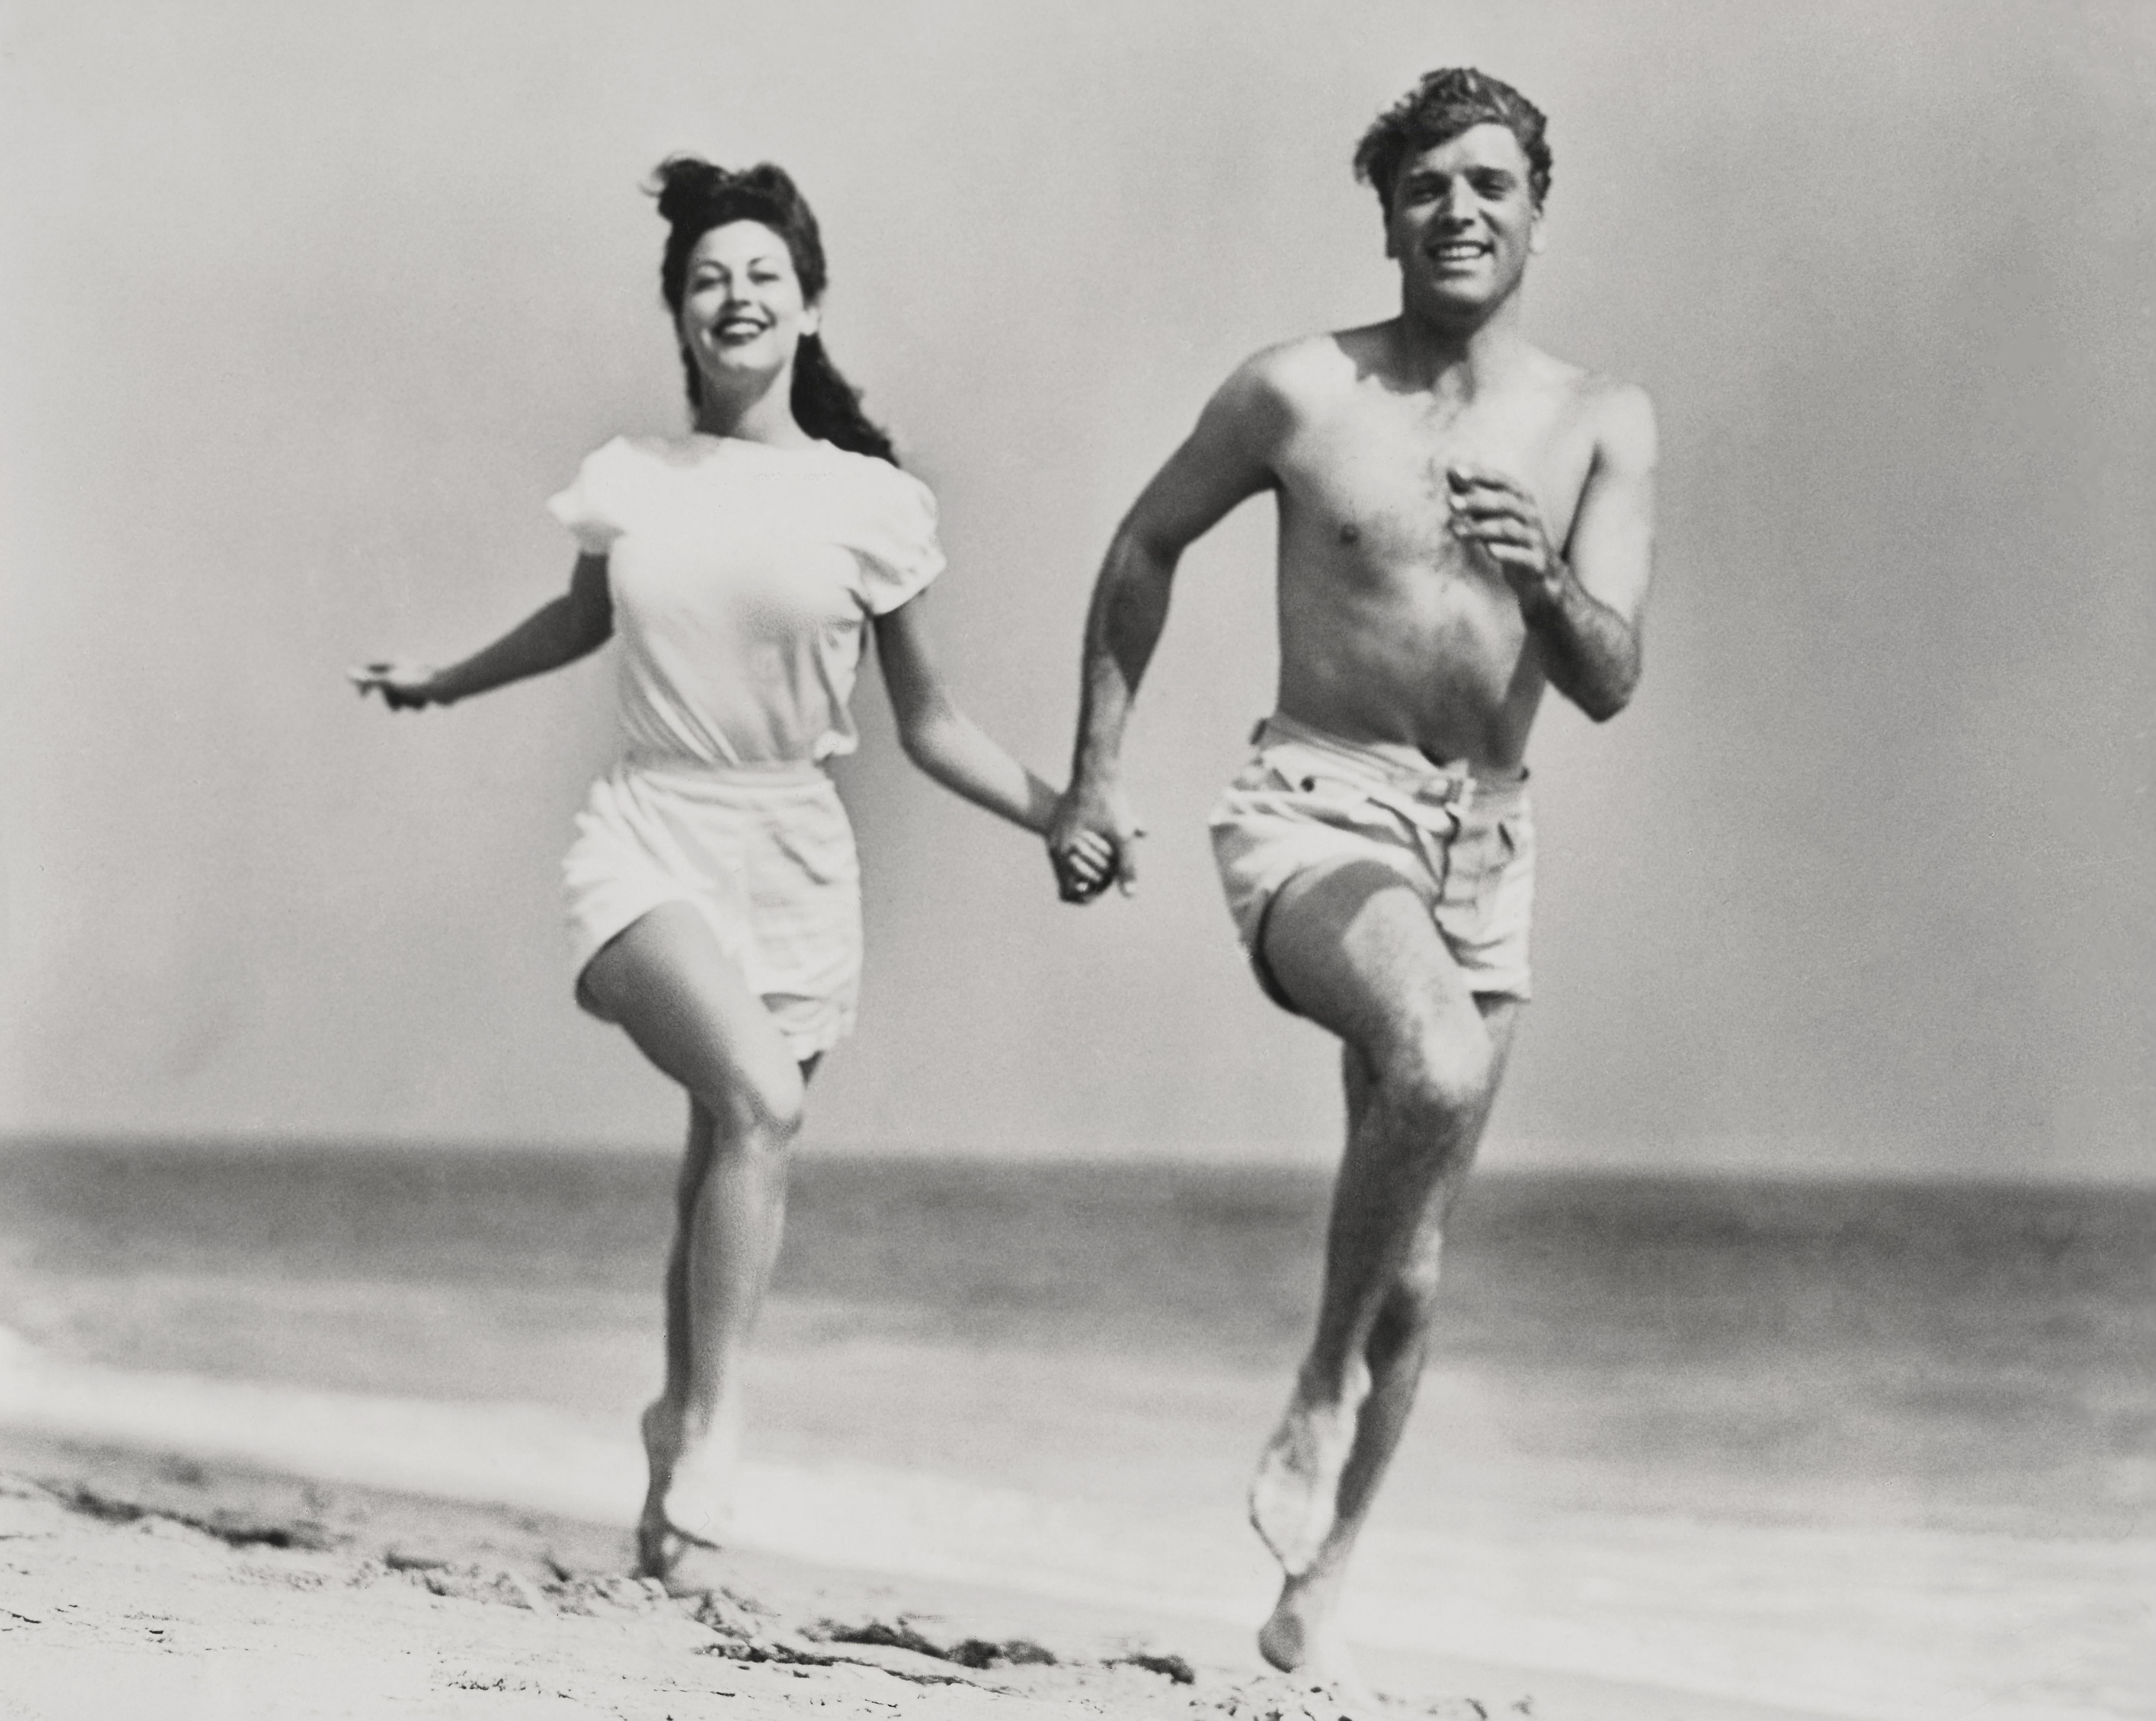 Unknown Portrait Photograph - Burt Lancaster and Ava Gardner Running on the Beach Globe Photos Fine Art Print